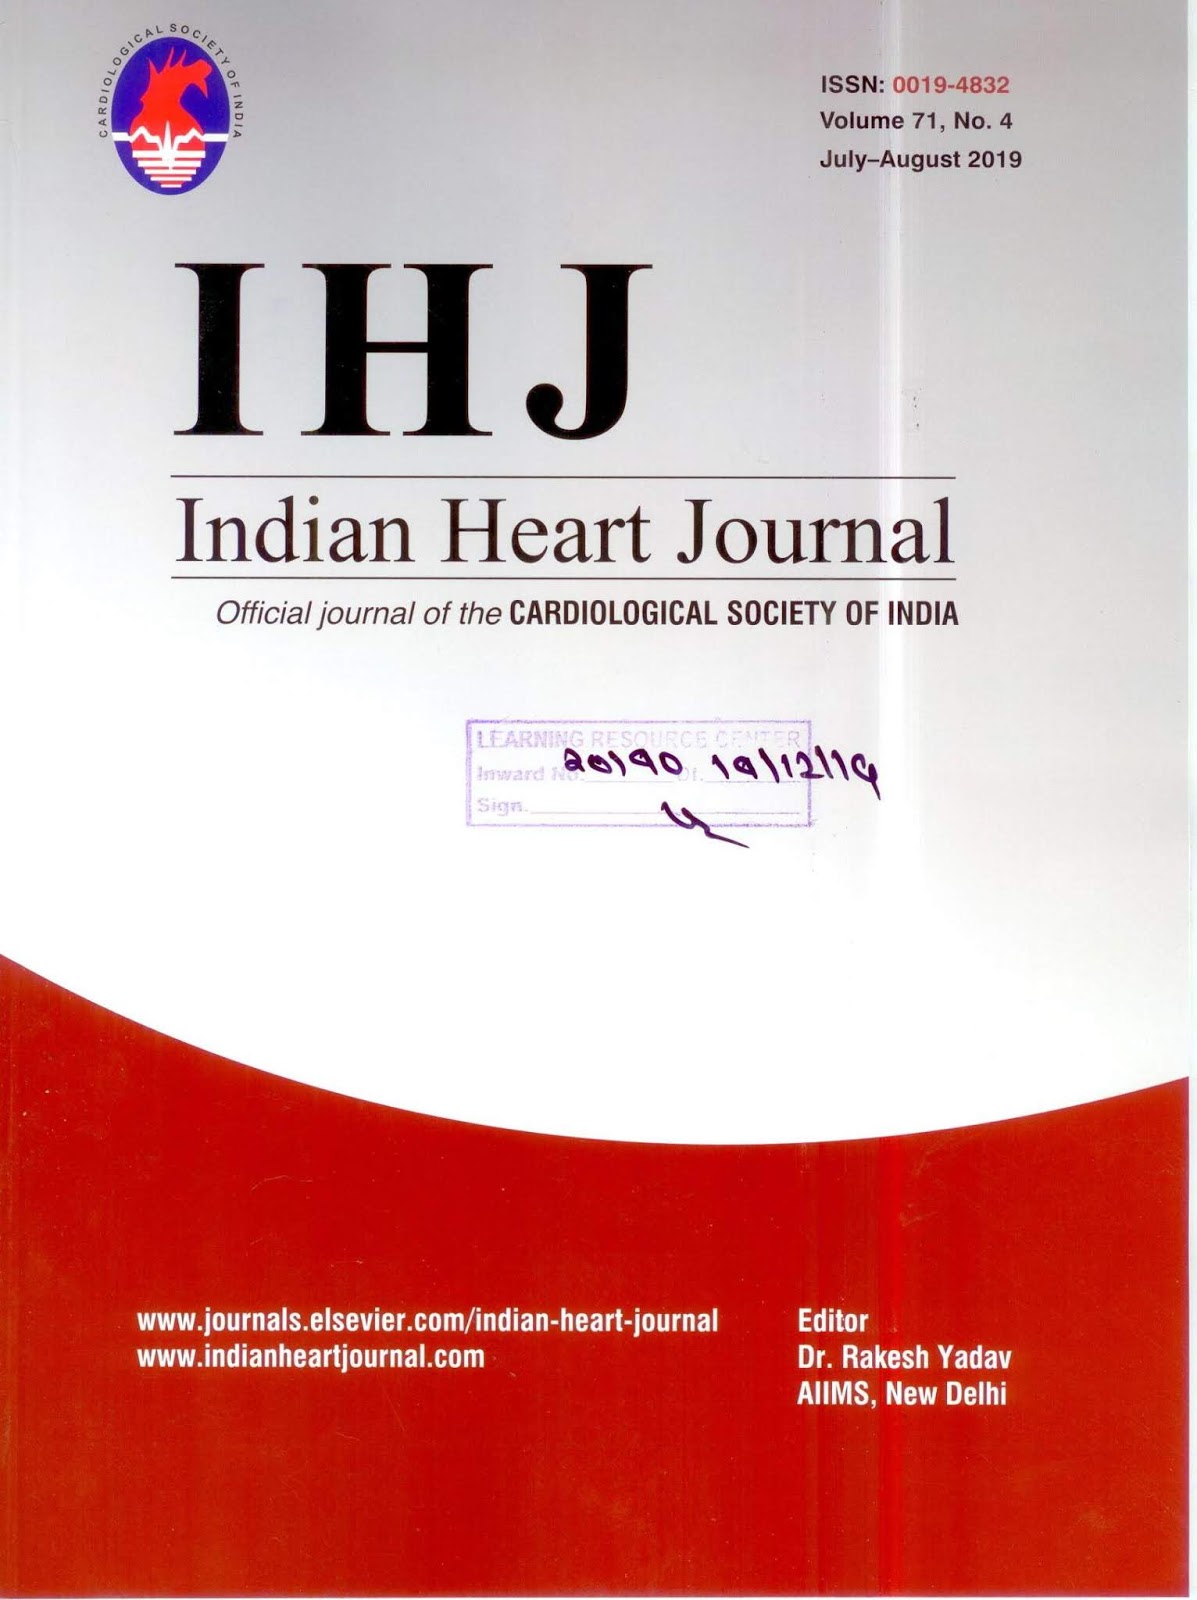 https://www.sciencedirect.com/journal/indian-heart-journal/vol/71/issue/4